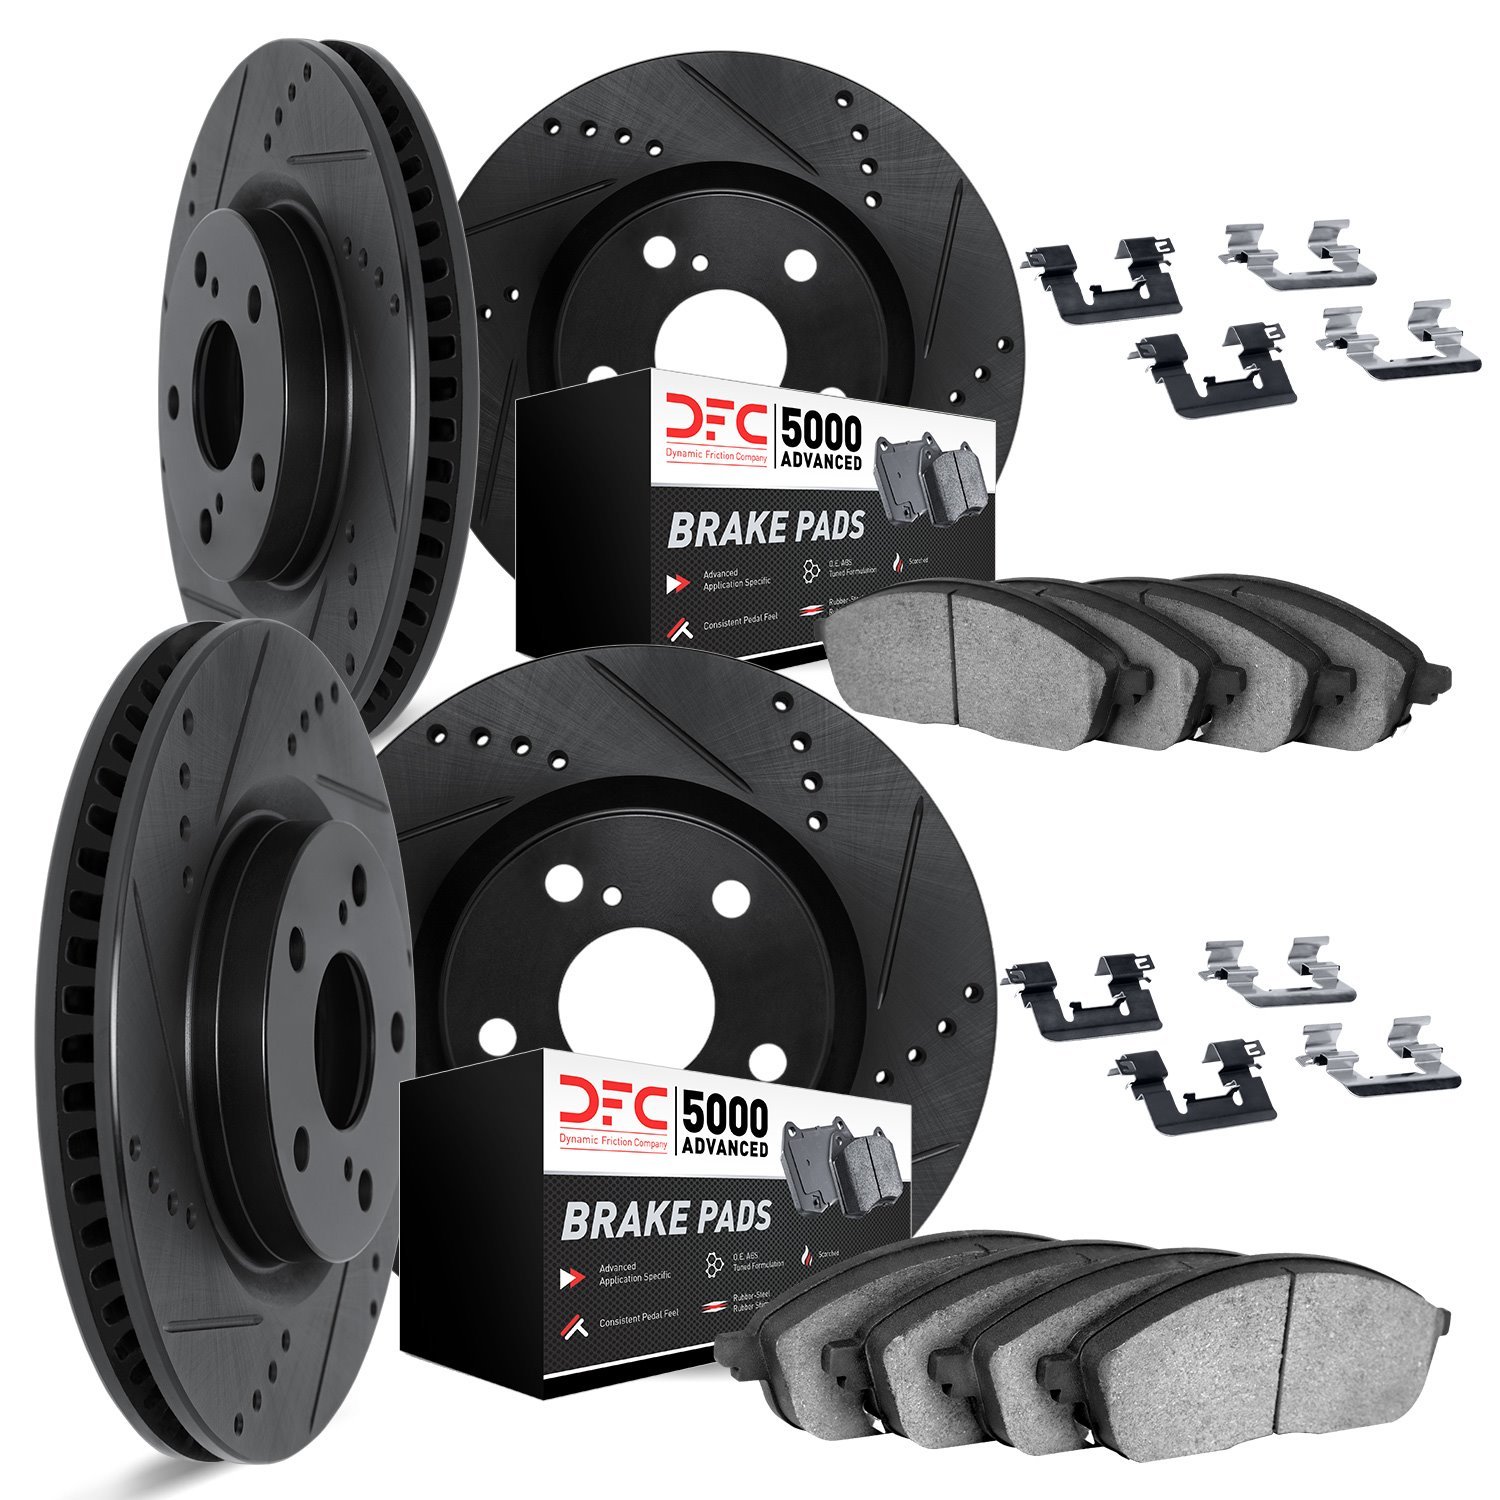 8514-40027 Drilled/Slotted Brake Rotors w/5000 Advanced Brake Pads Kit & Hardware [Black], 2006-2018 Mopar, Position: Front and